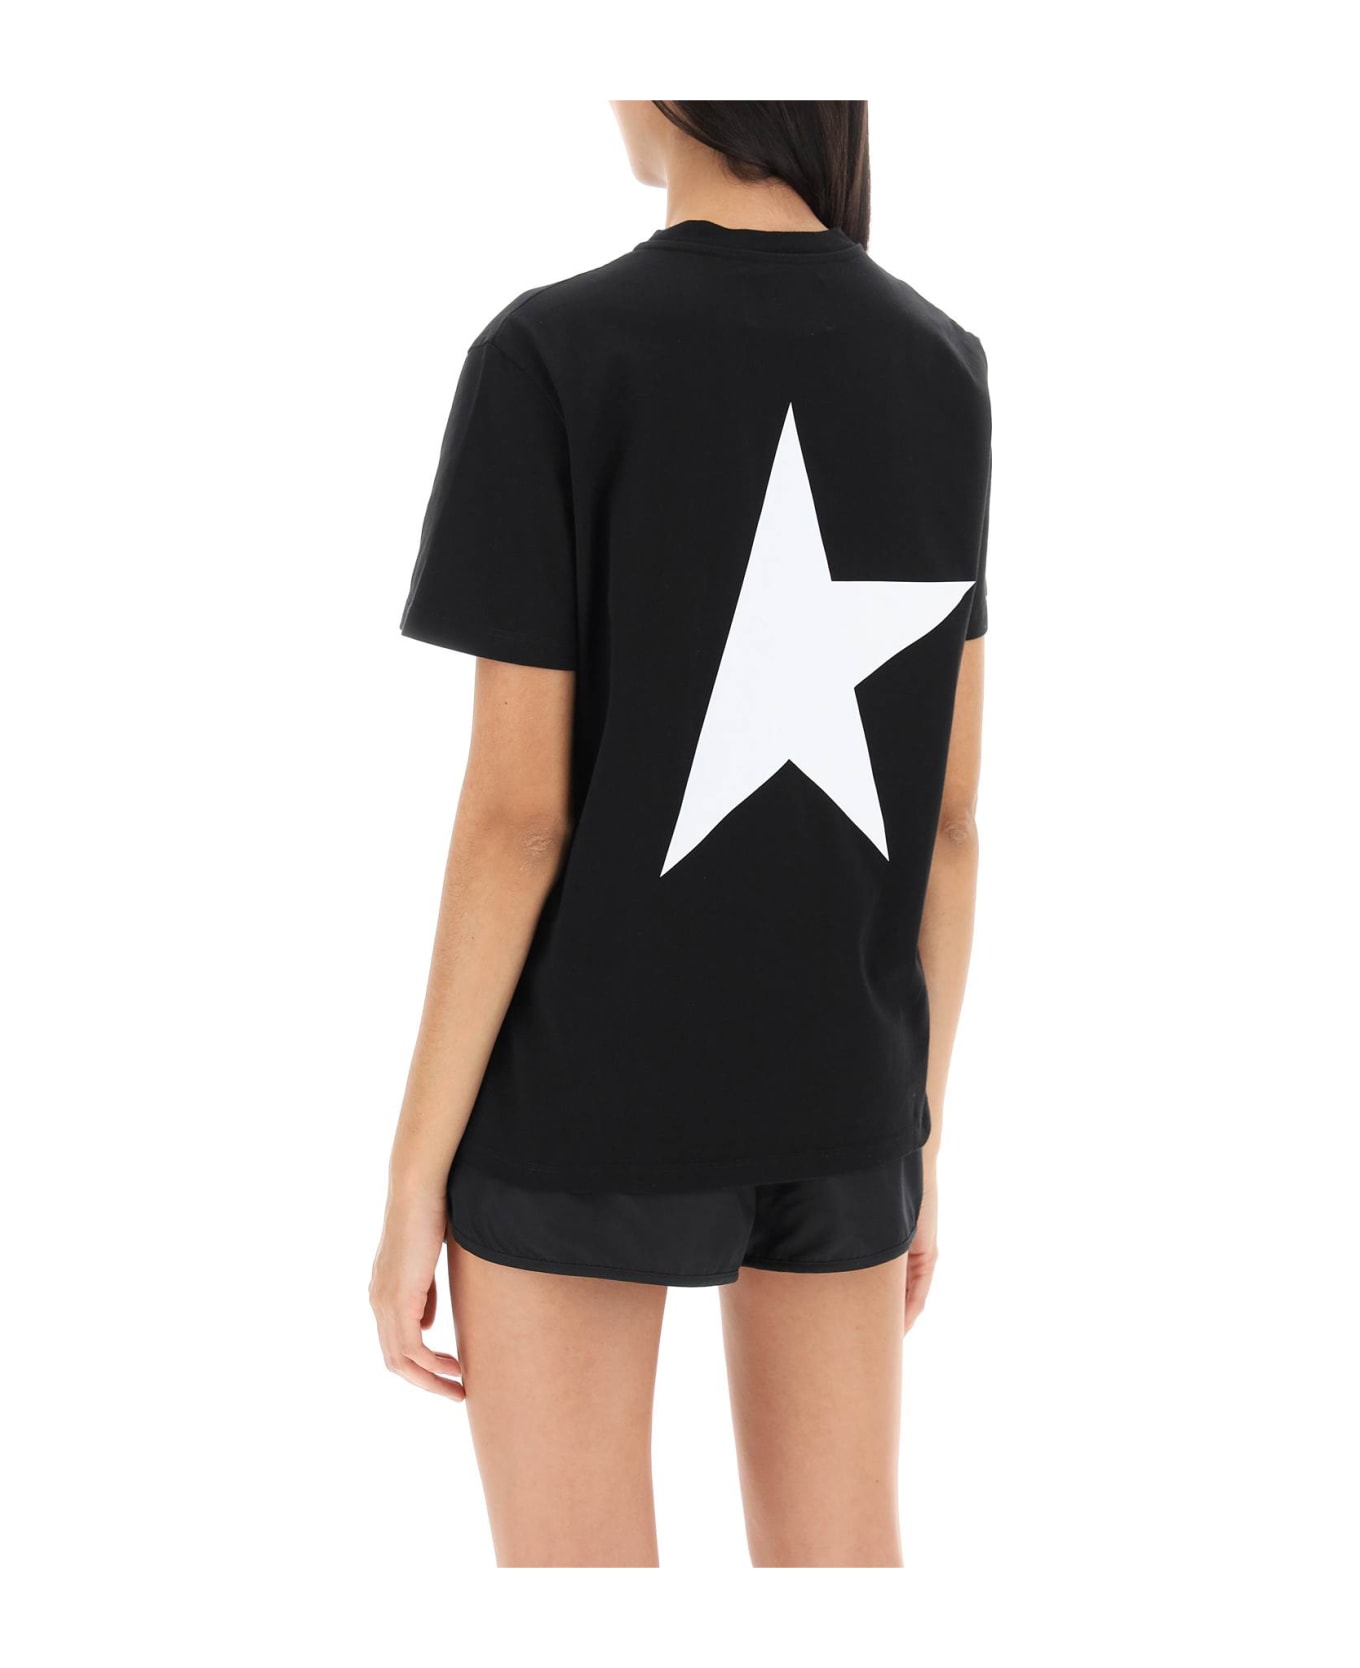 Golden Goose T-shirt With Star Print - BLACK WHITE (Black)